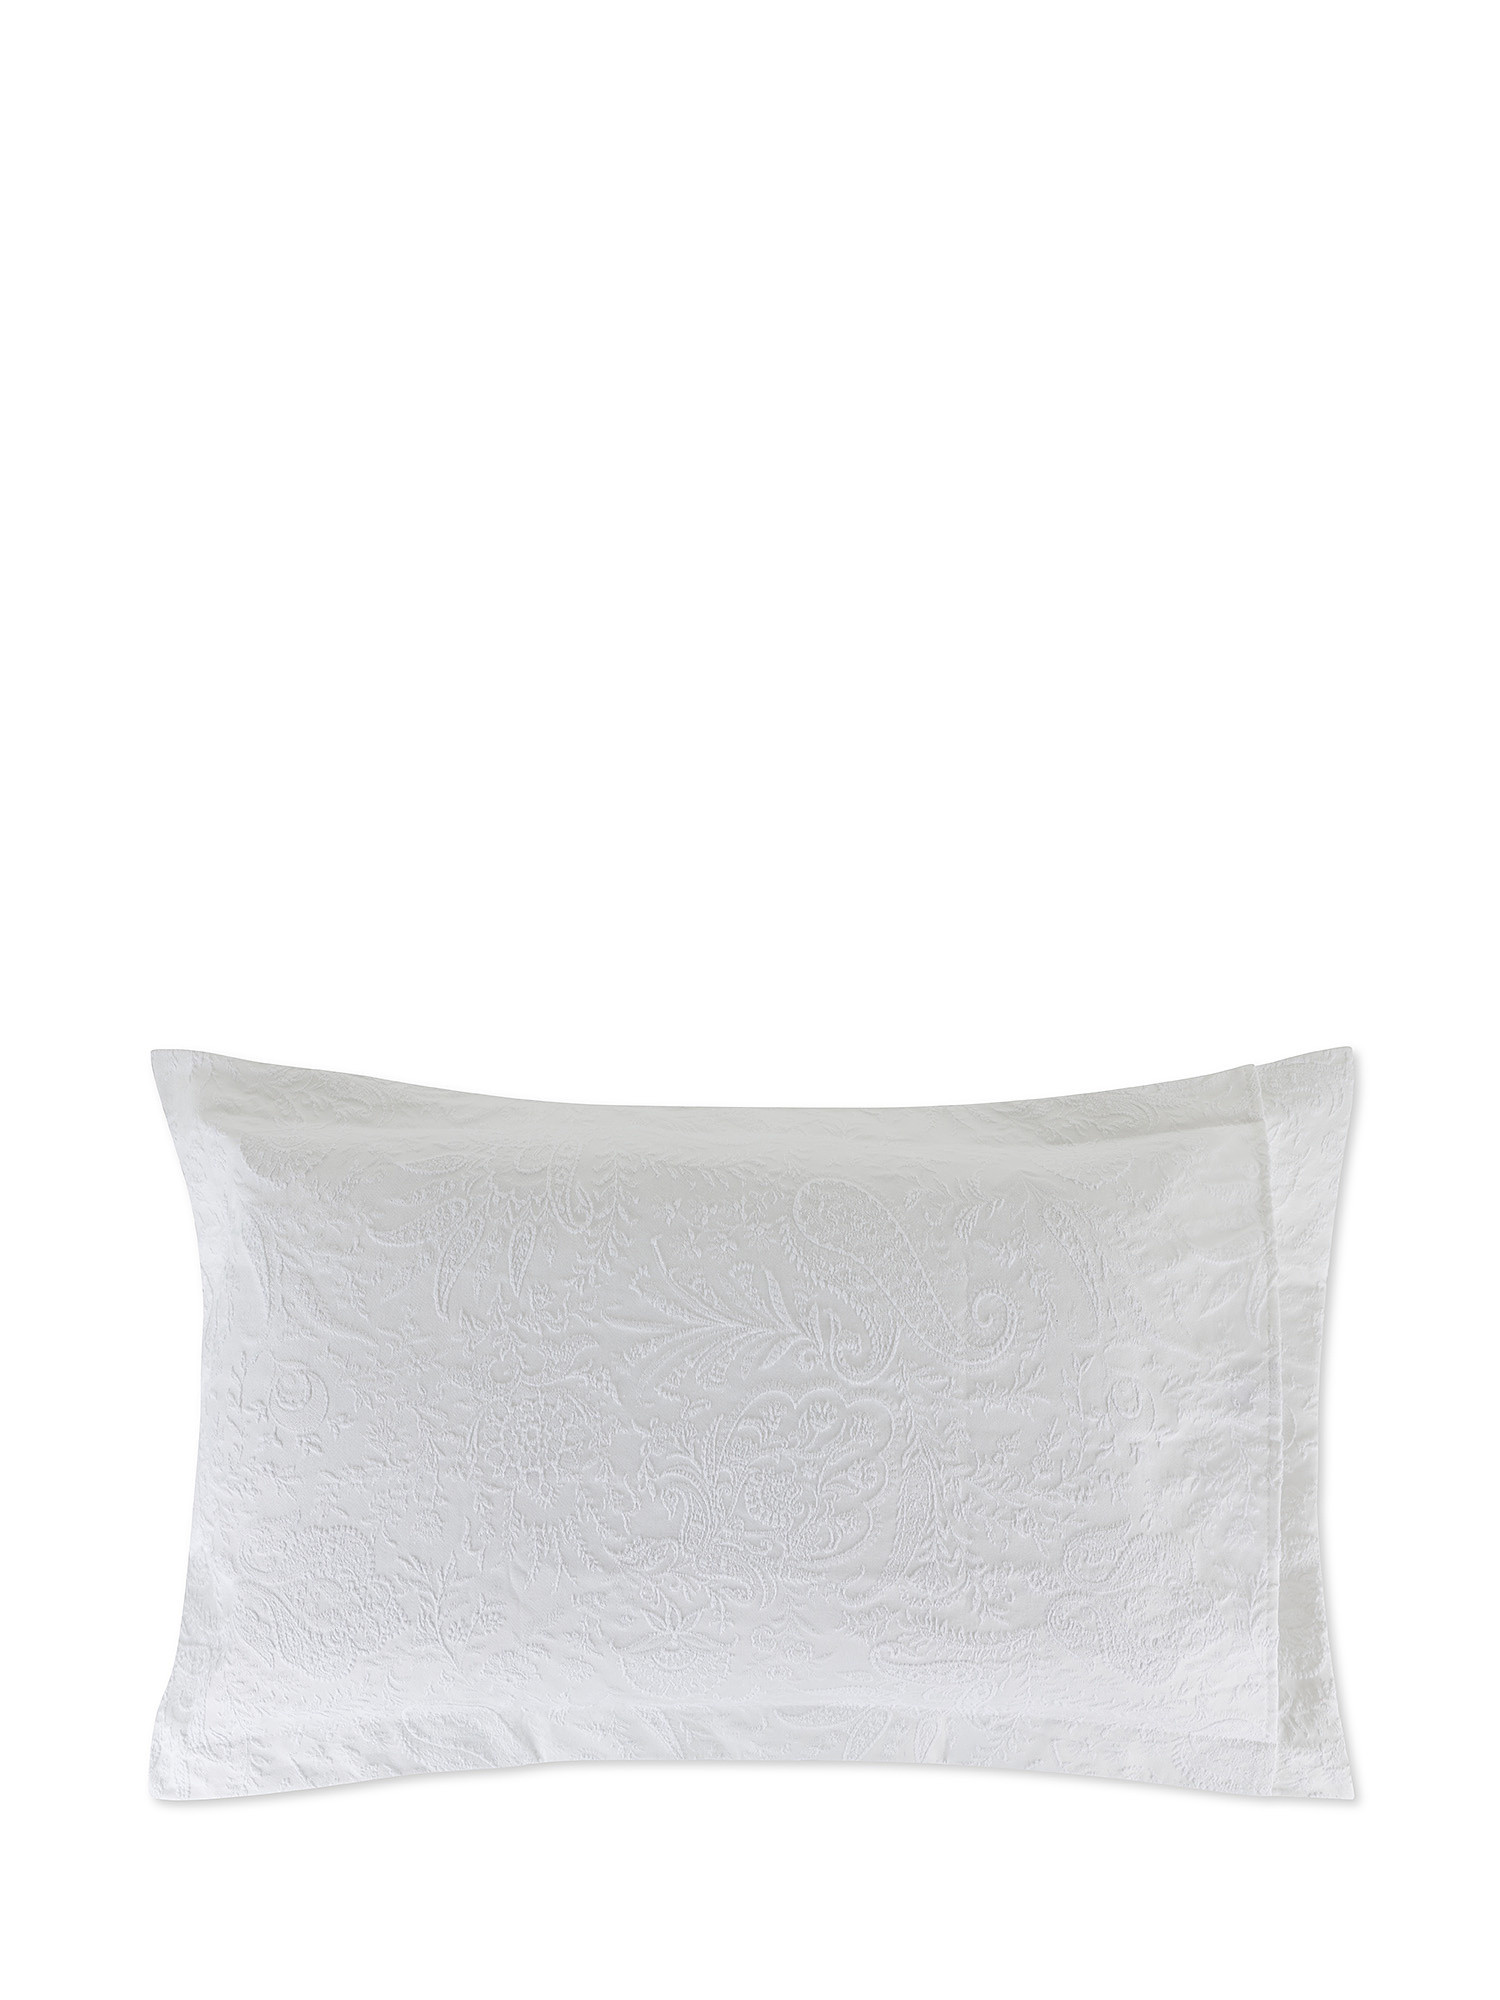 Portofino fantasy pillow cover for paisley, White, large image number 1